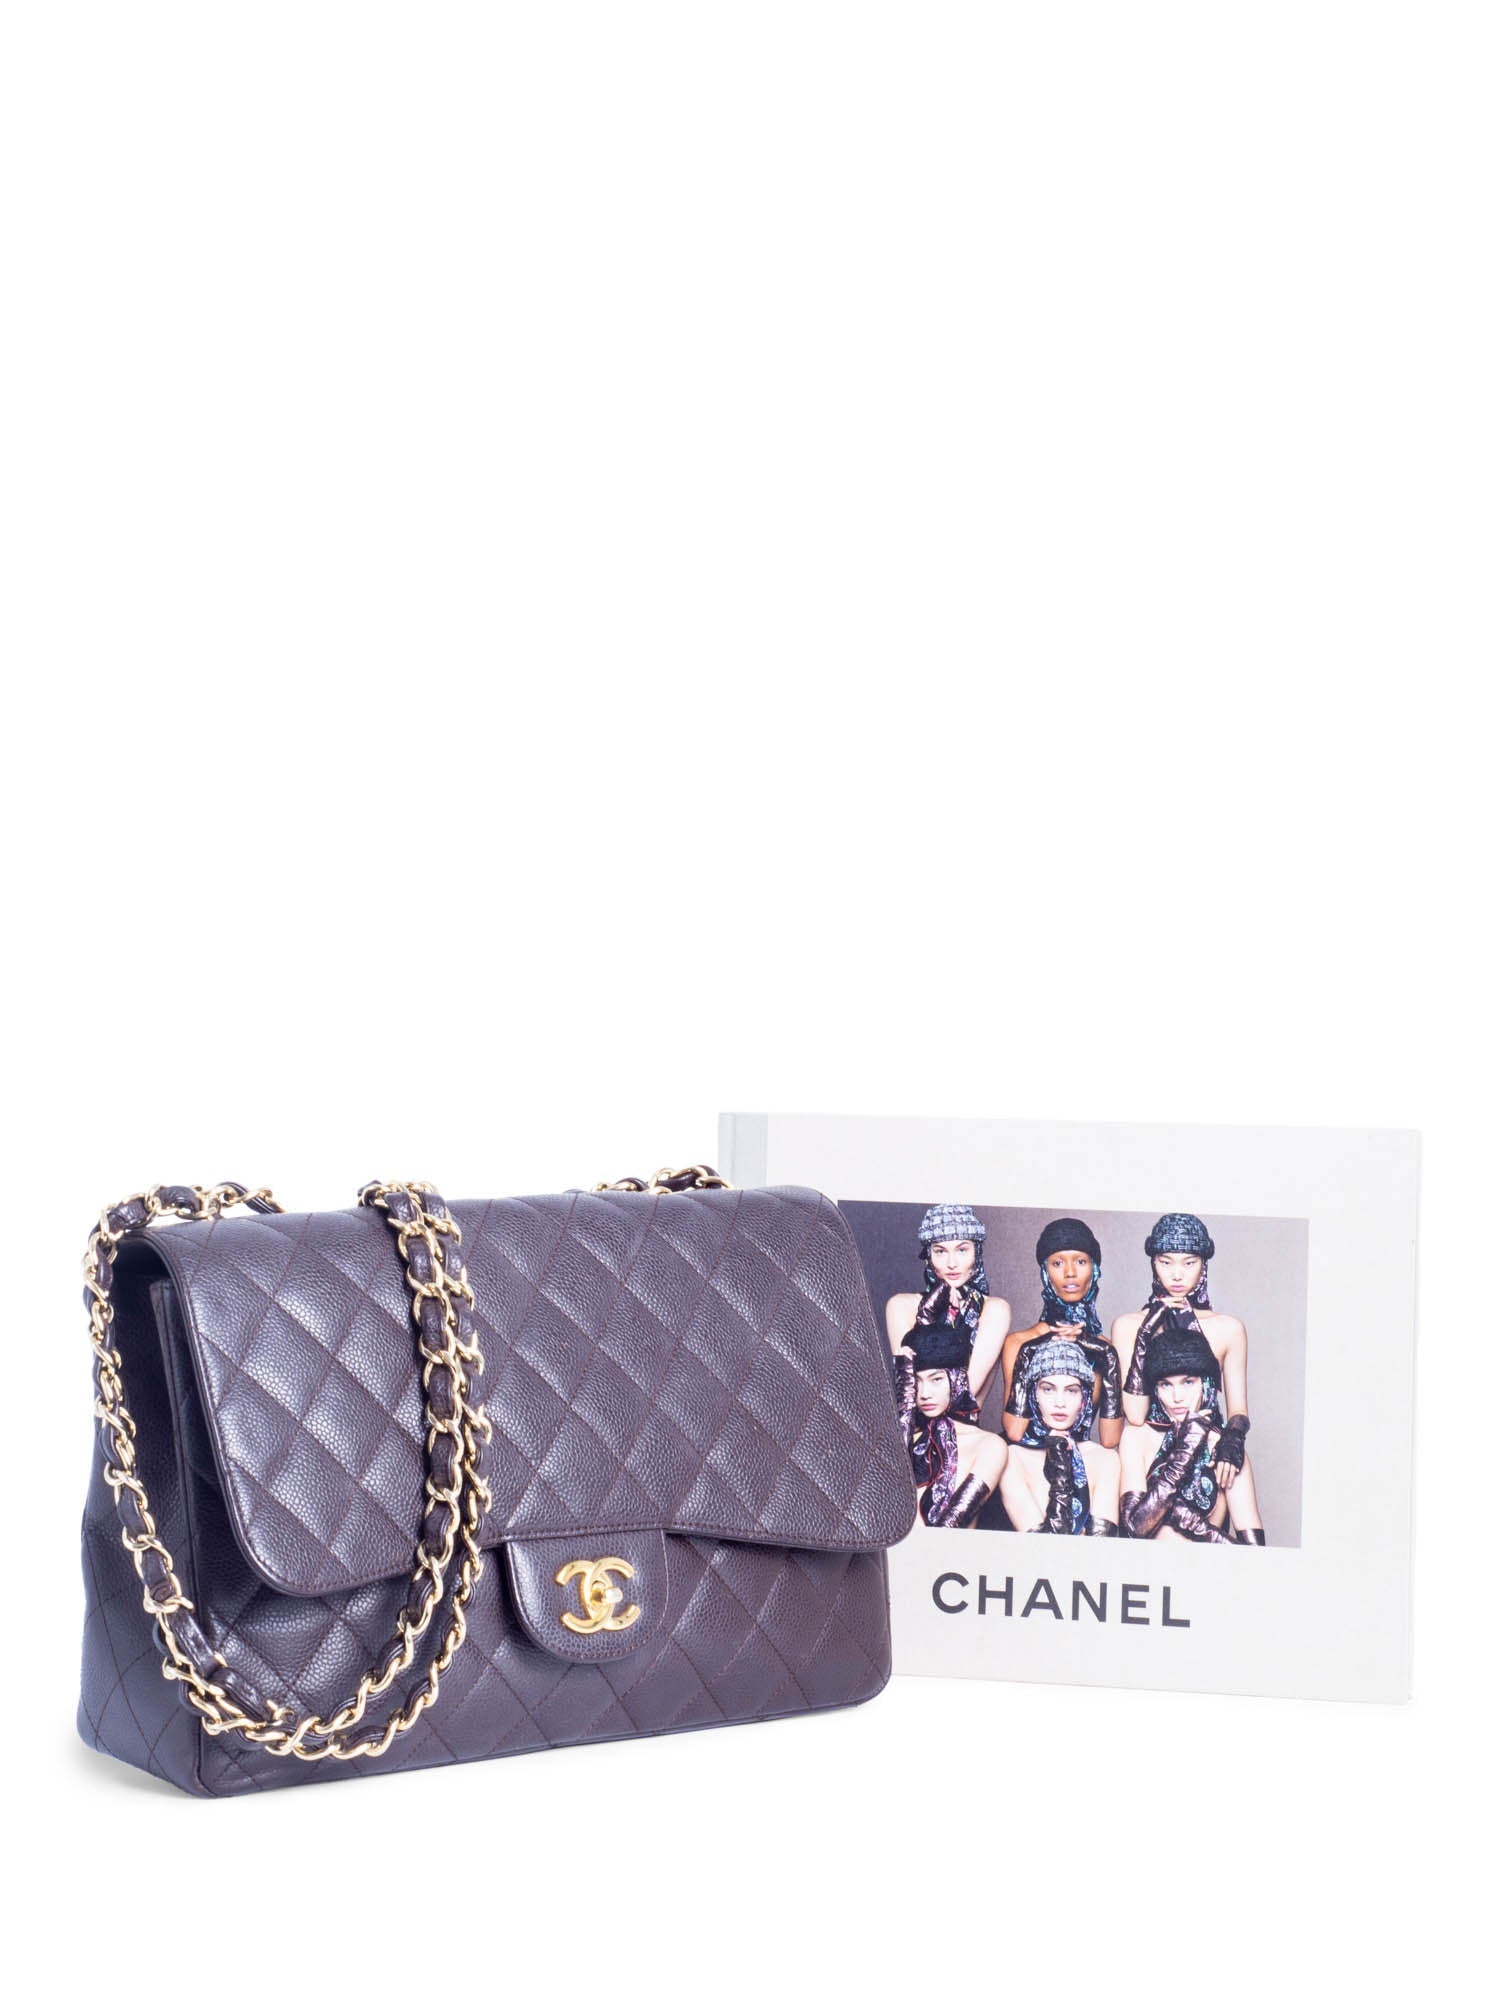 Chanel Purse Pricing  LoveToKnow